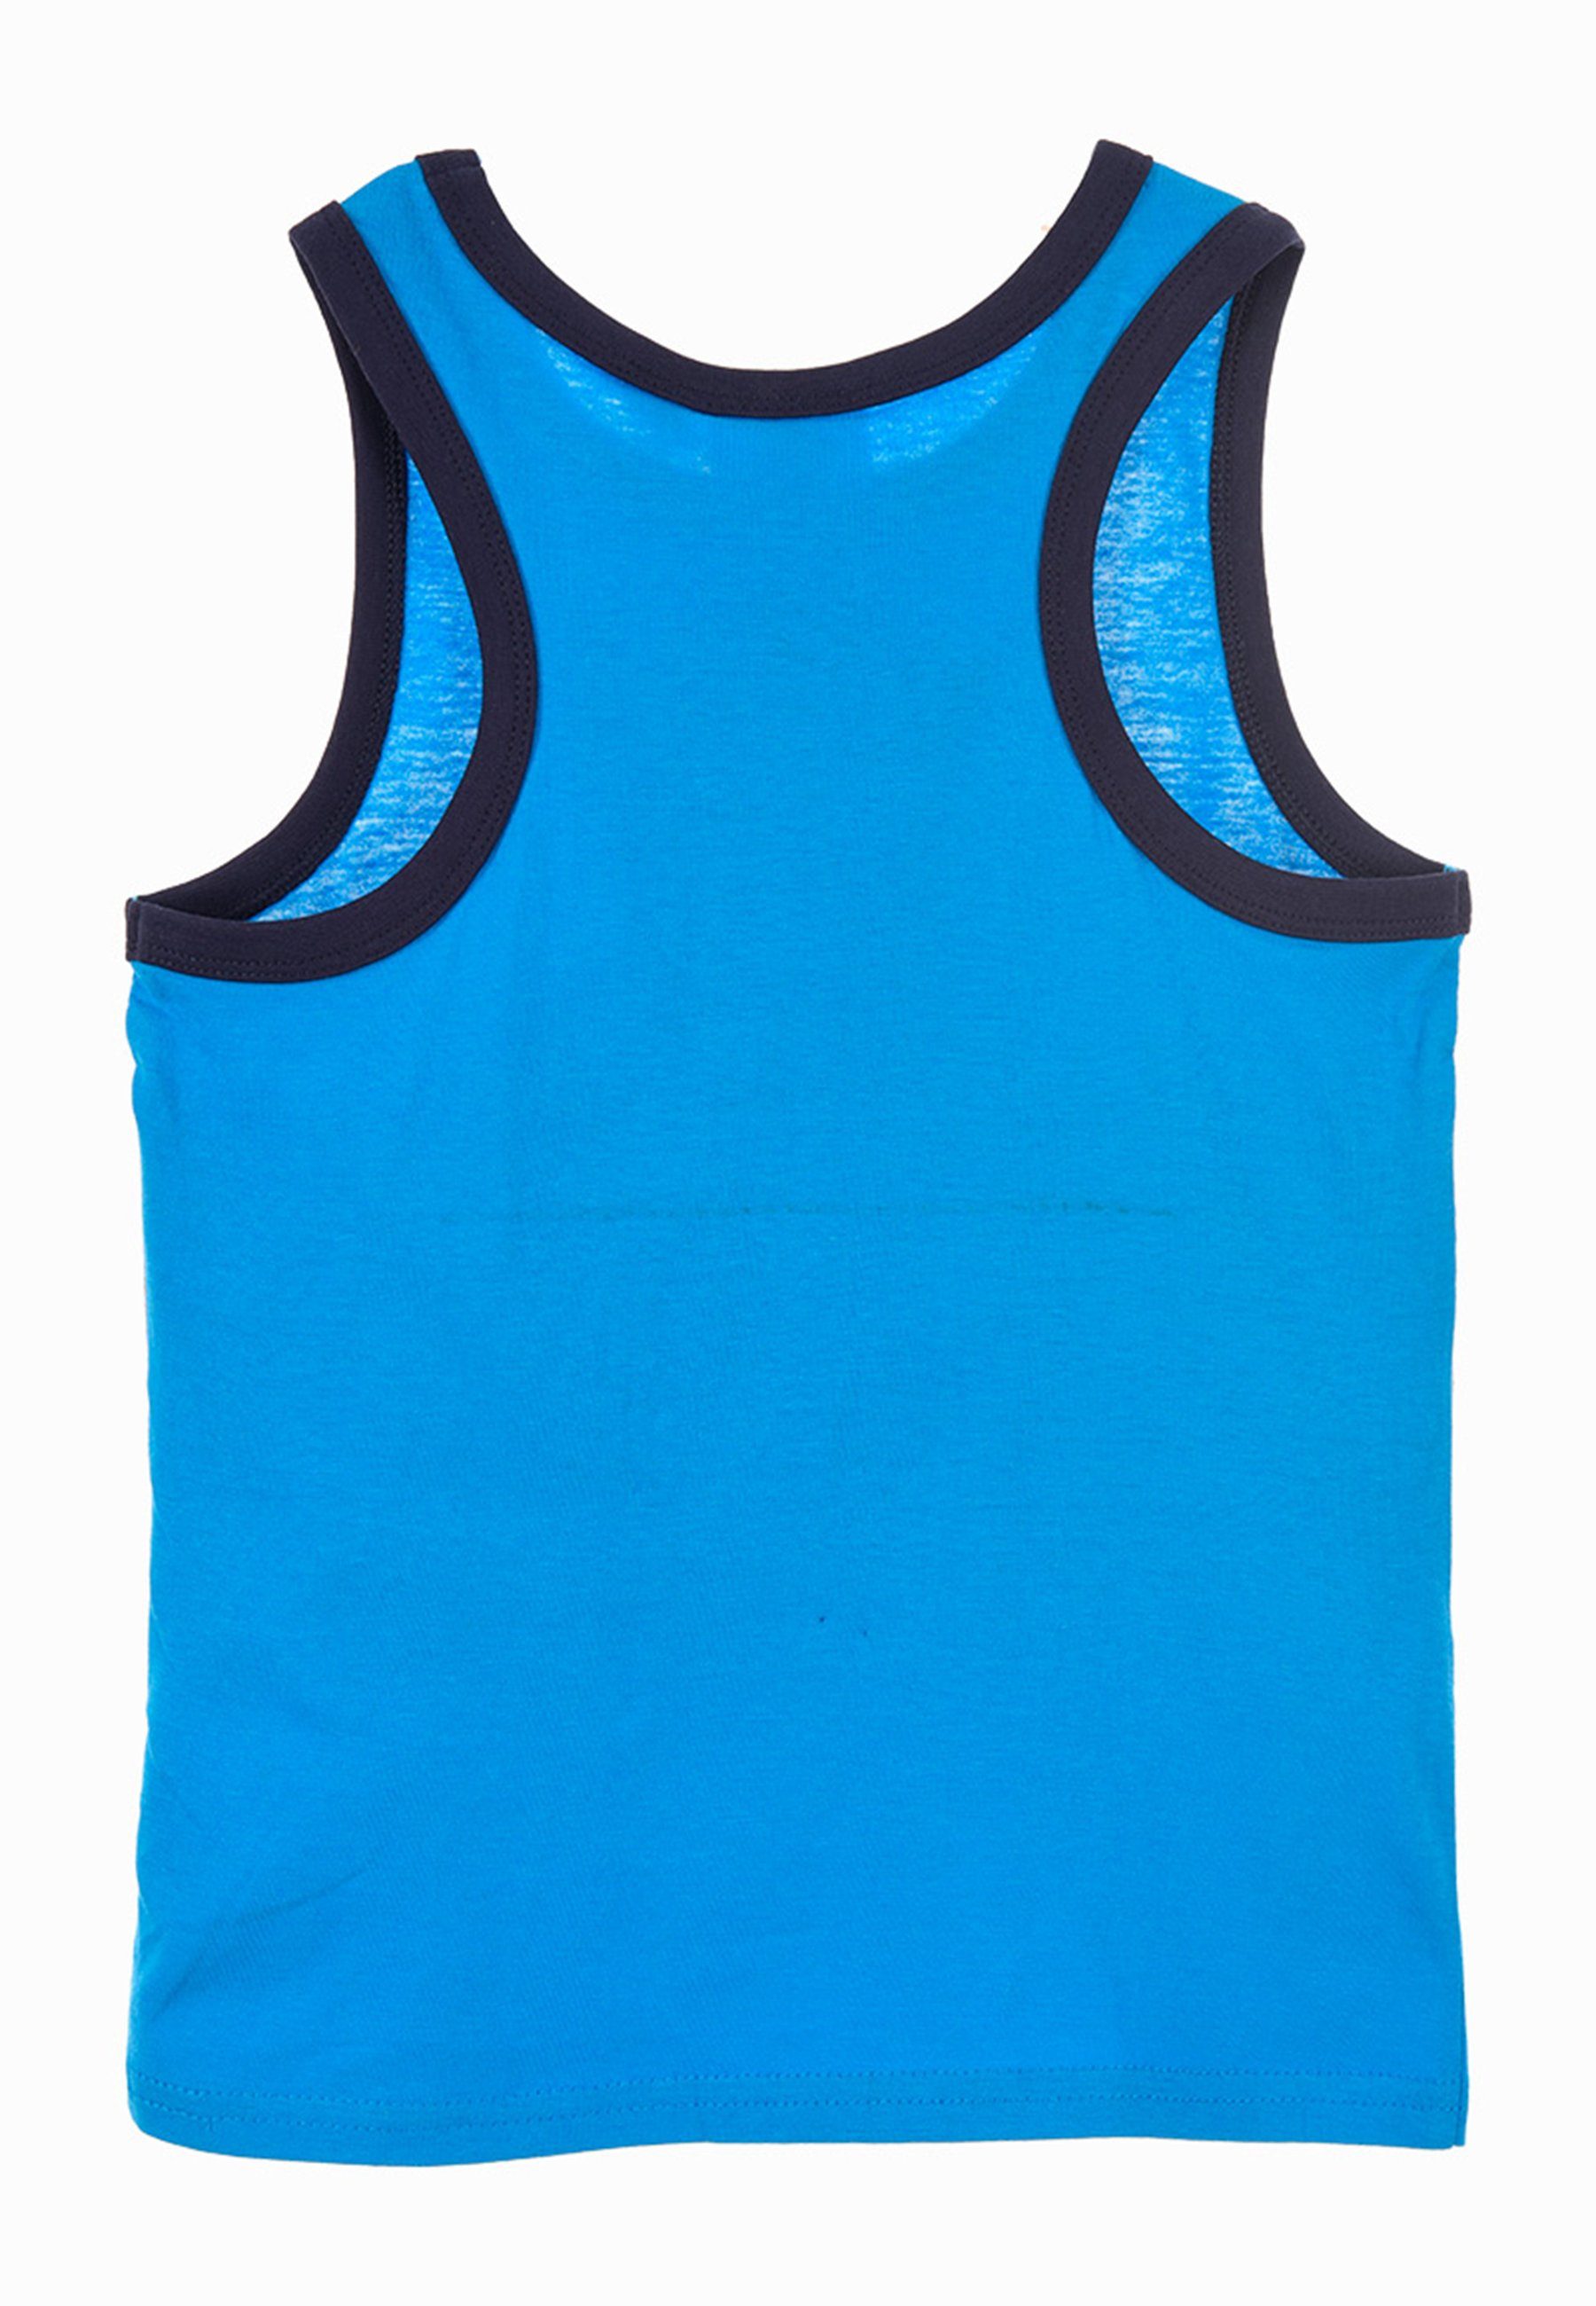 PAW Muskelshirt Muskel-Shirt PATROL Jungen Blau Sommer-Shirt Tank-Top